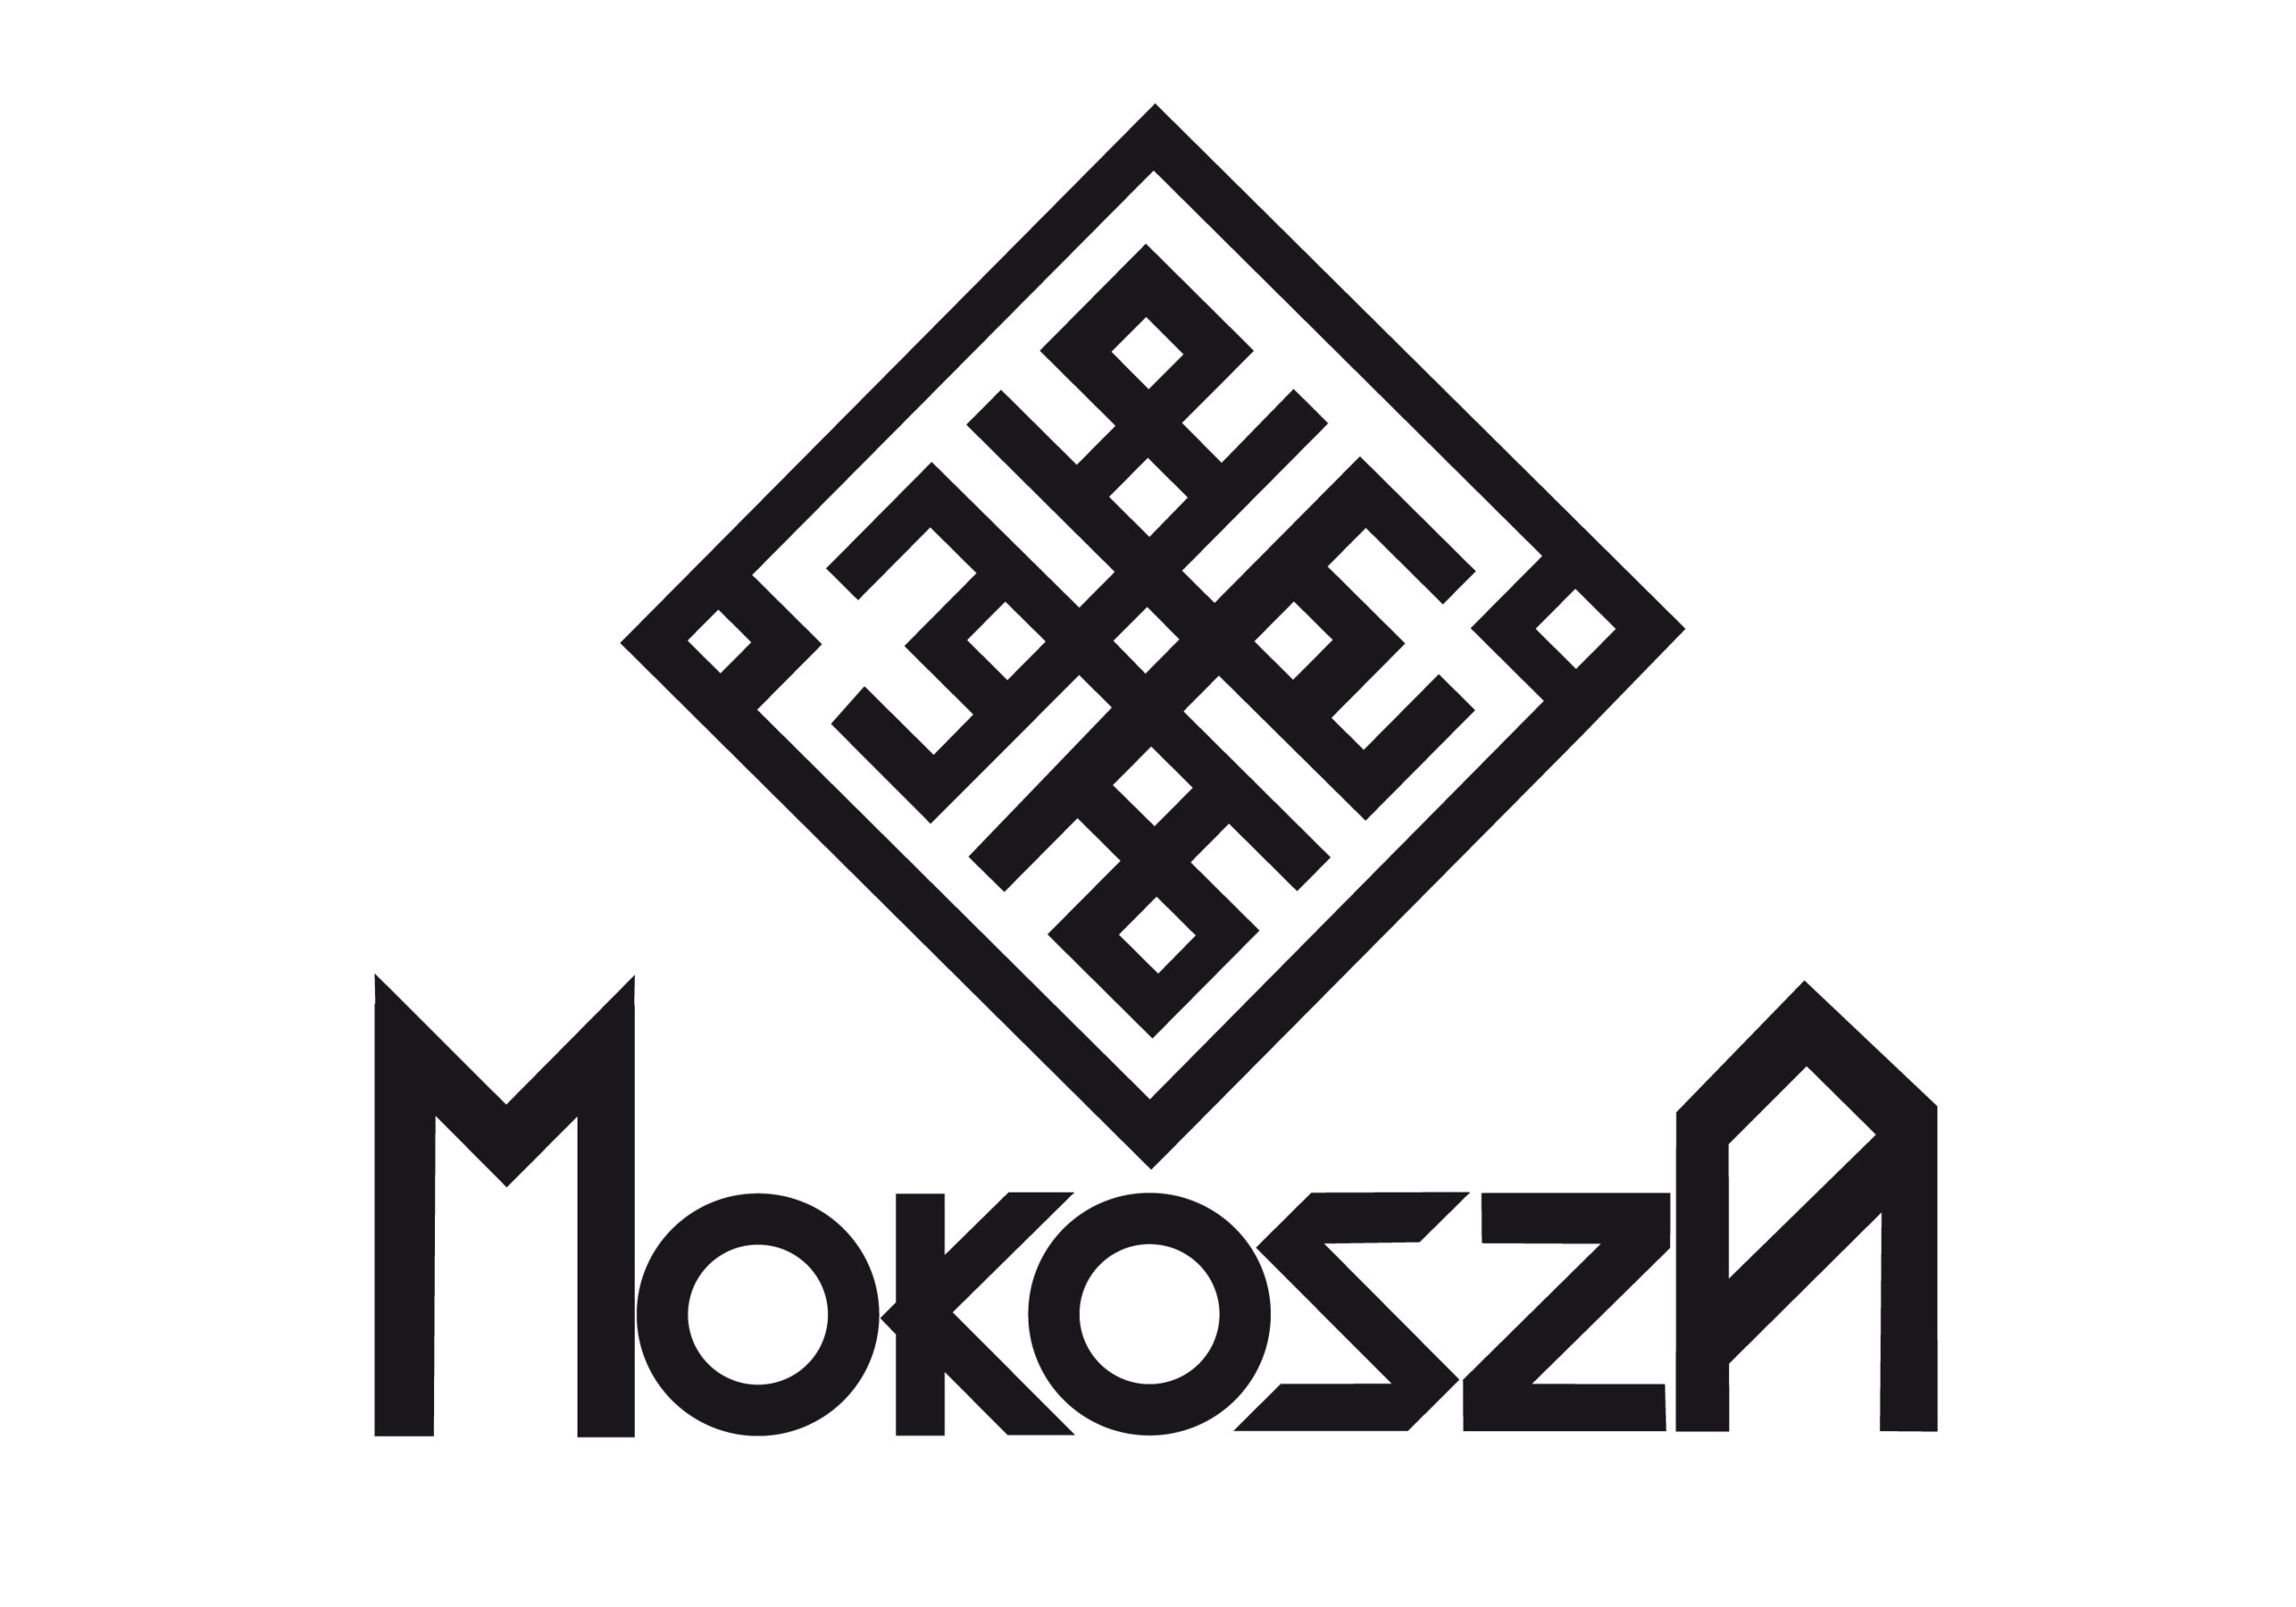 logo-mokosza-napis